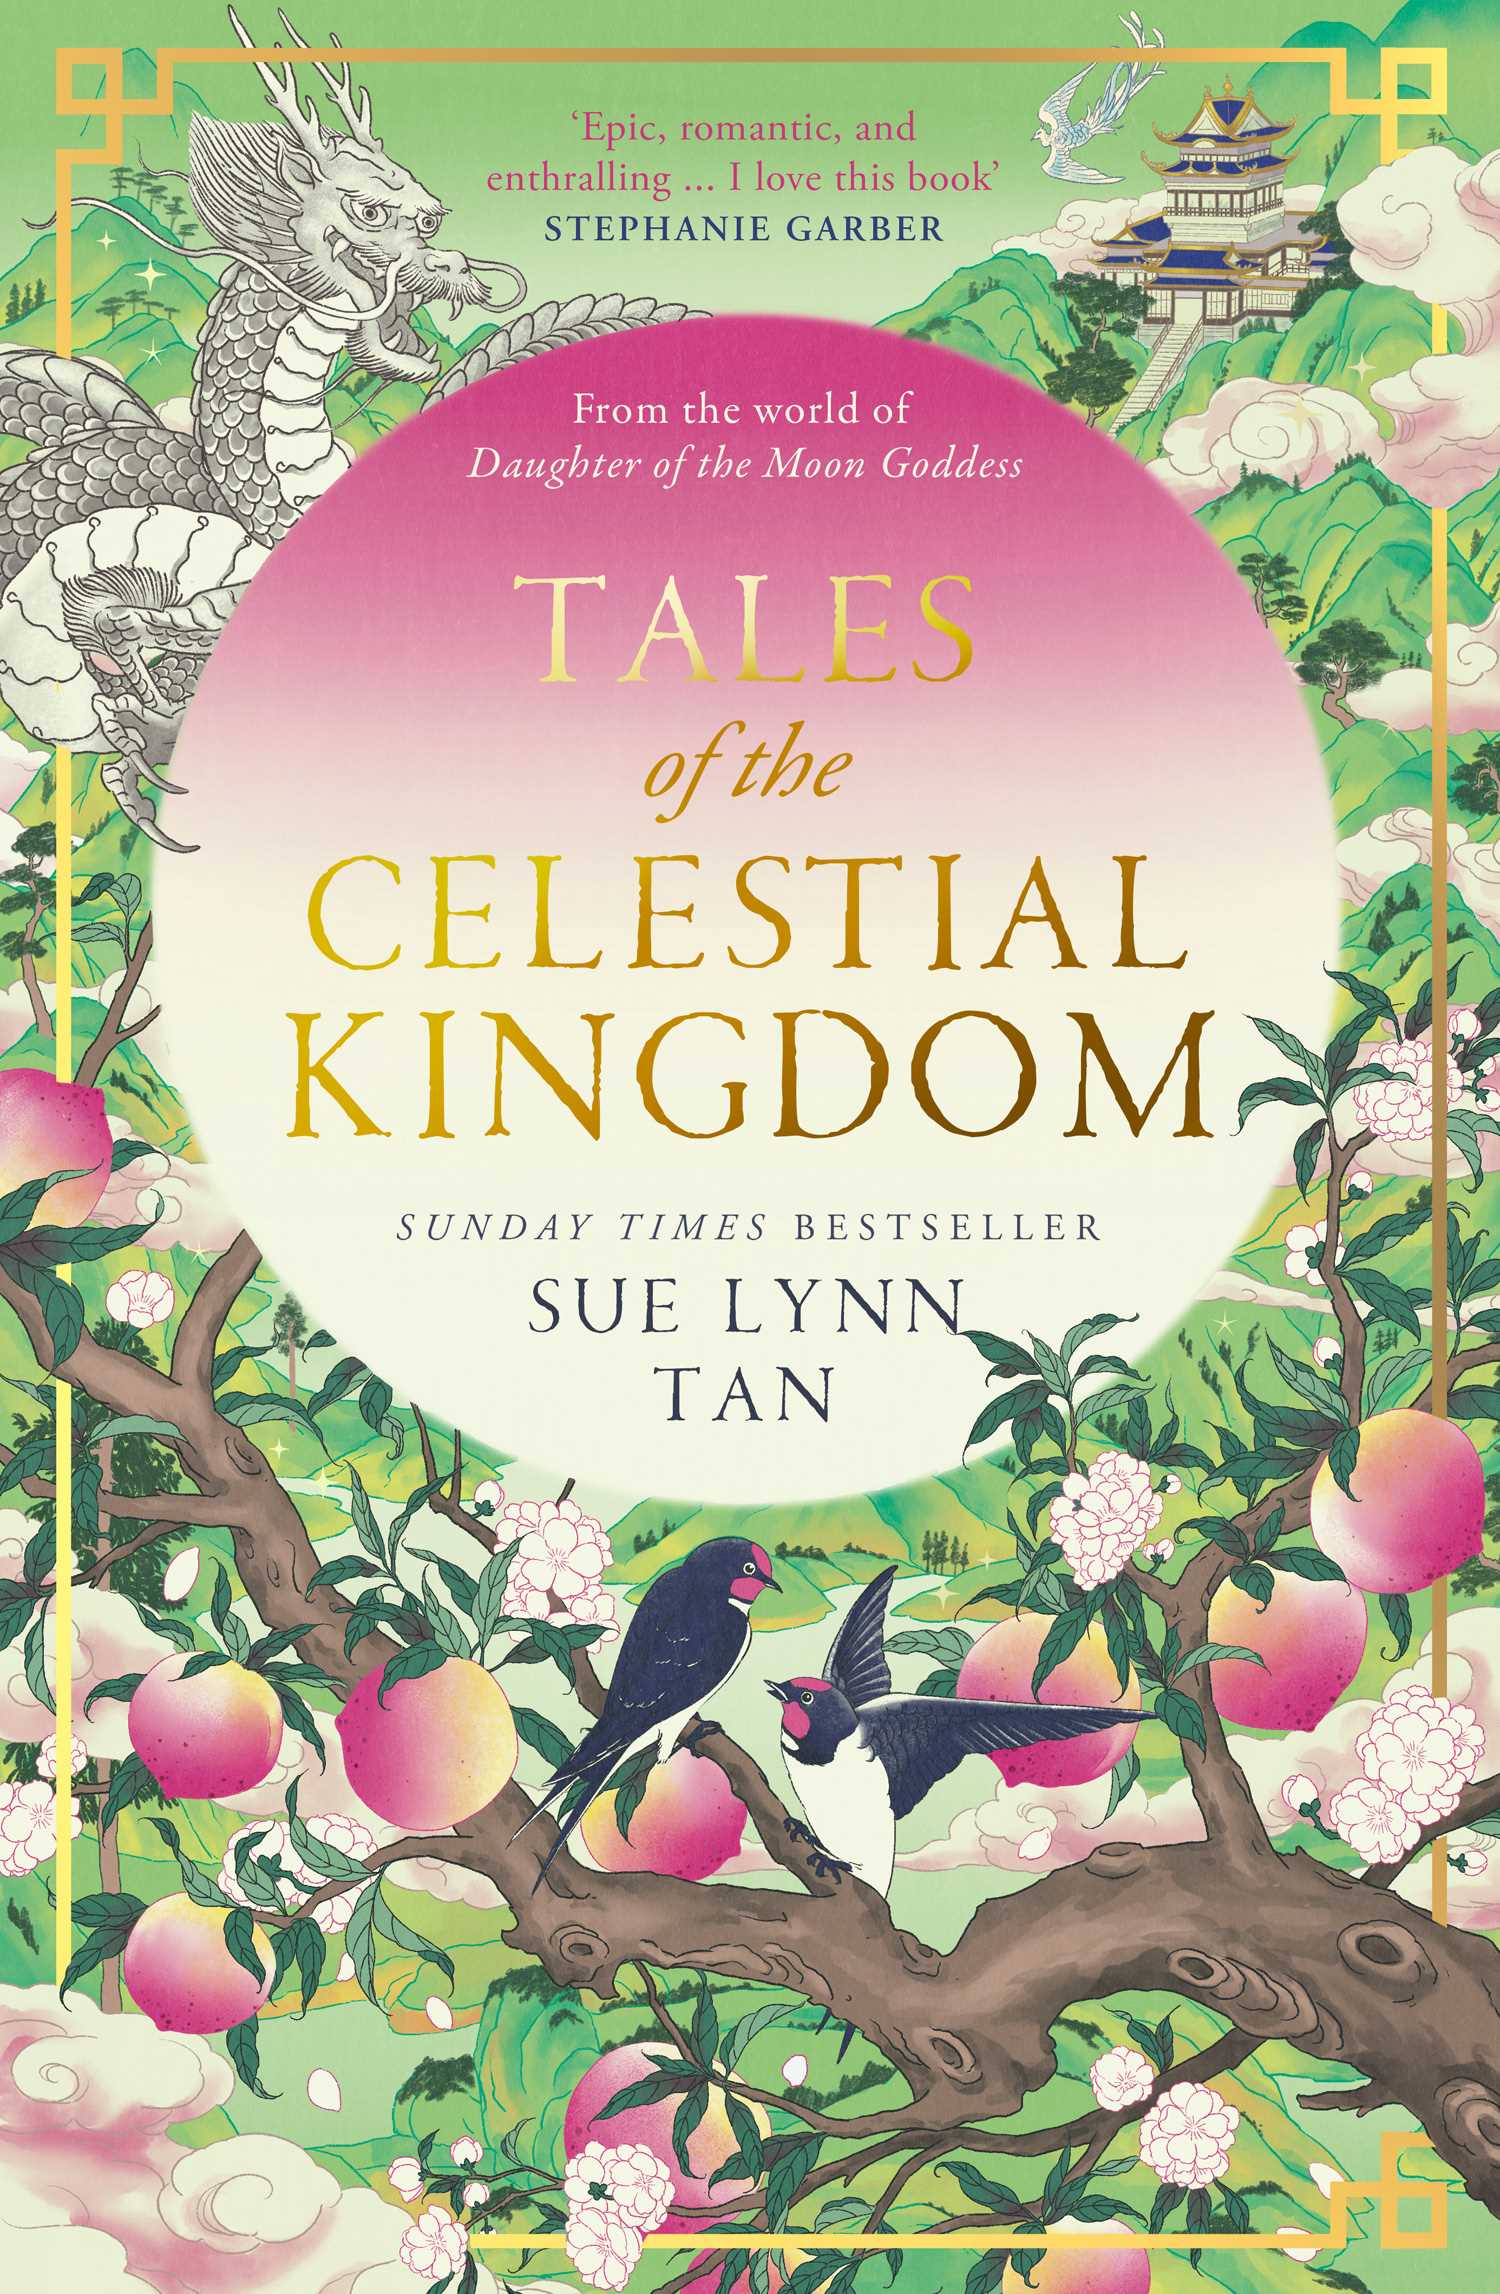 Tales of the Celestial Kingdom (The Celestial Kingdom series)